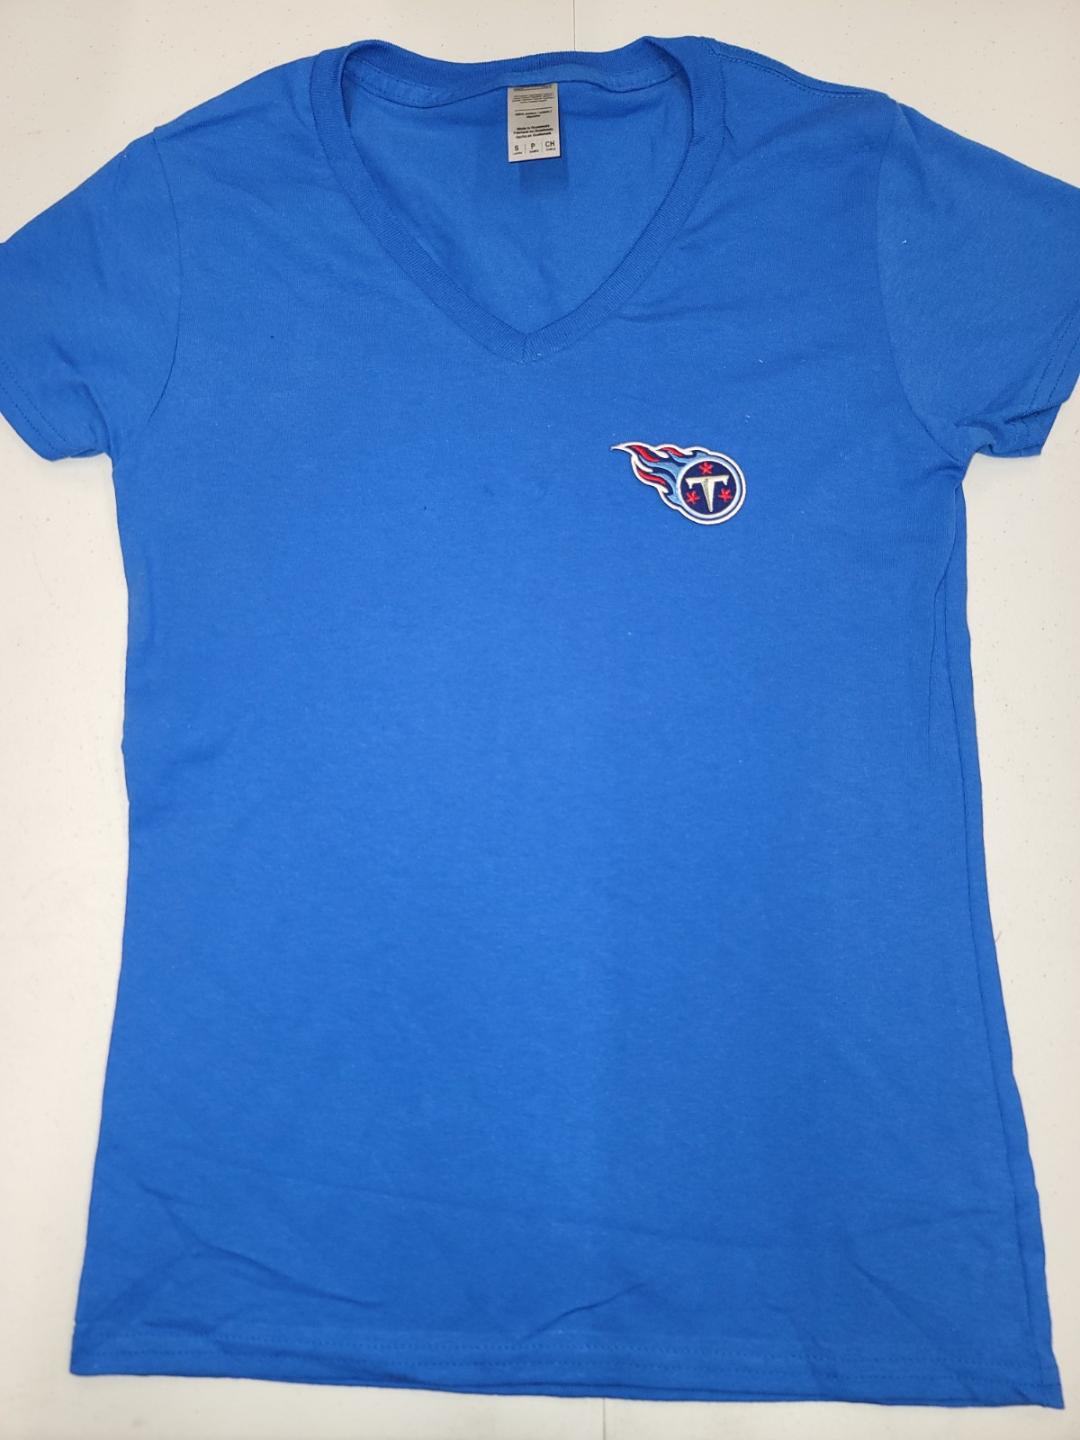 Womens NFL Team Apparel TENNESSEE TITANS V-Neck Football Shirt ROYAL